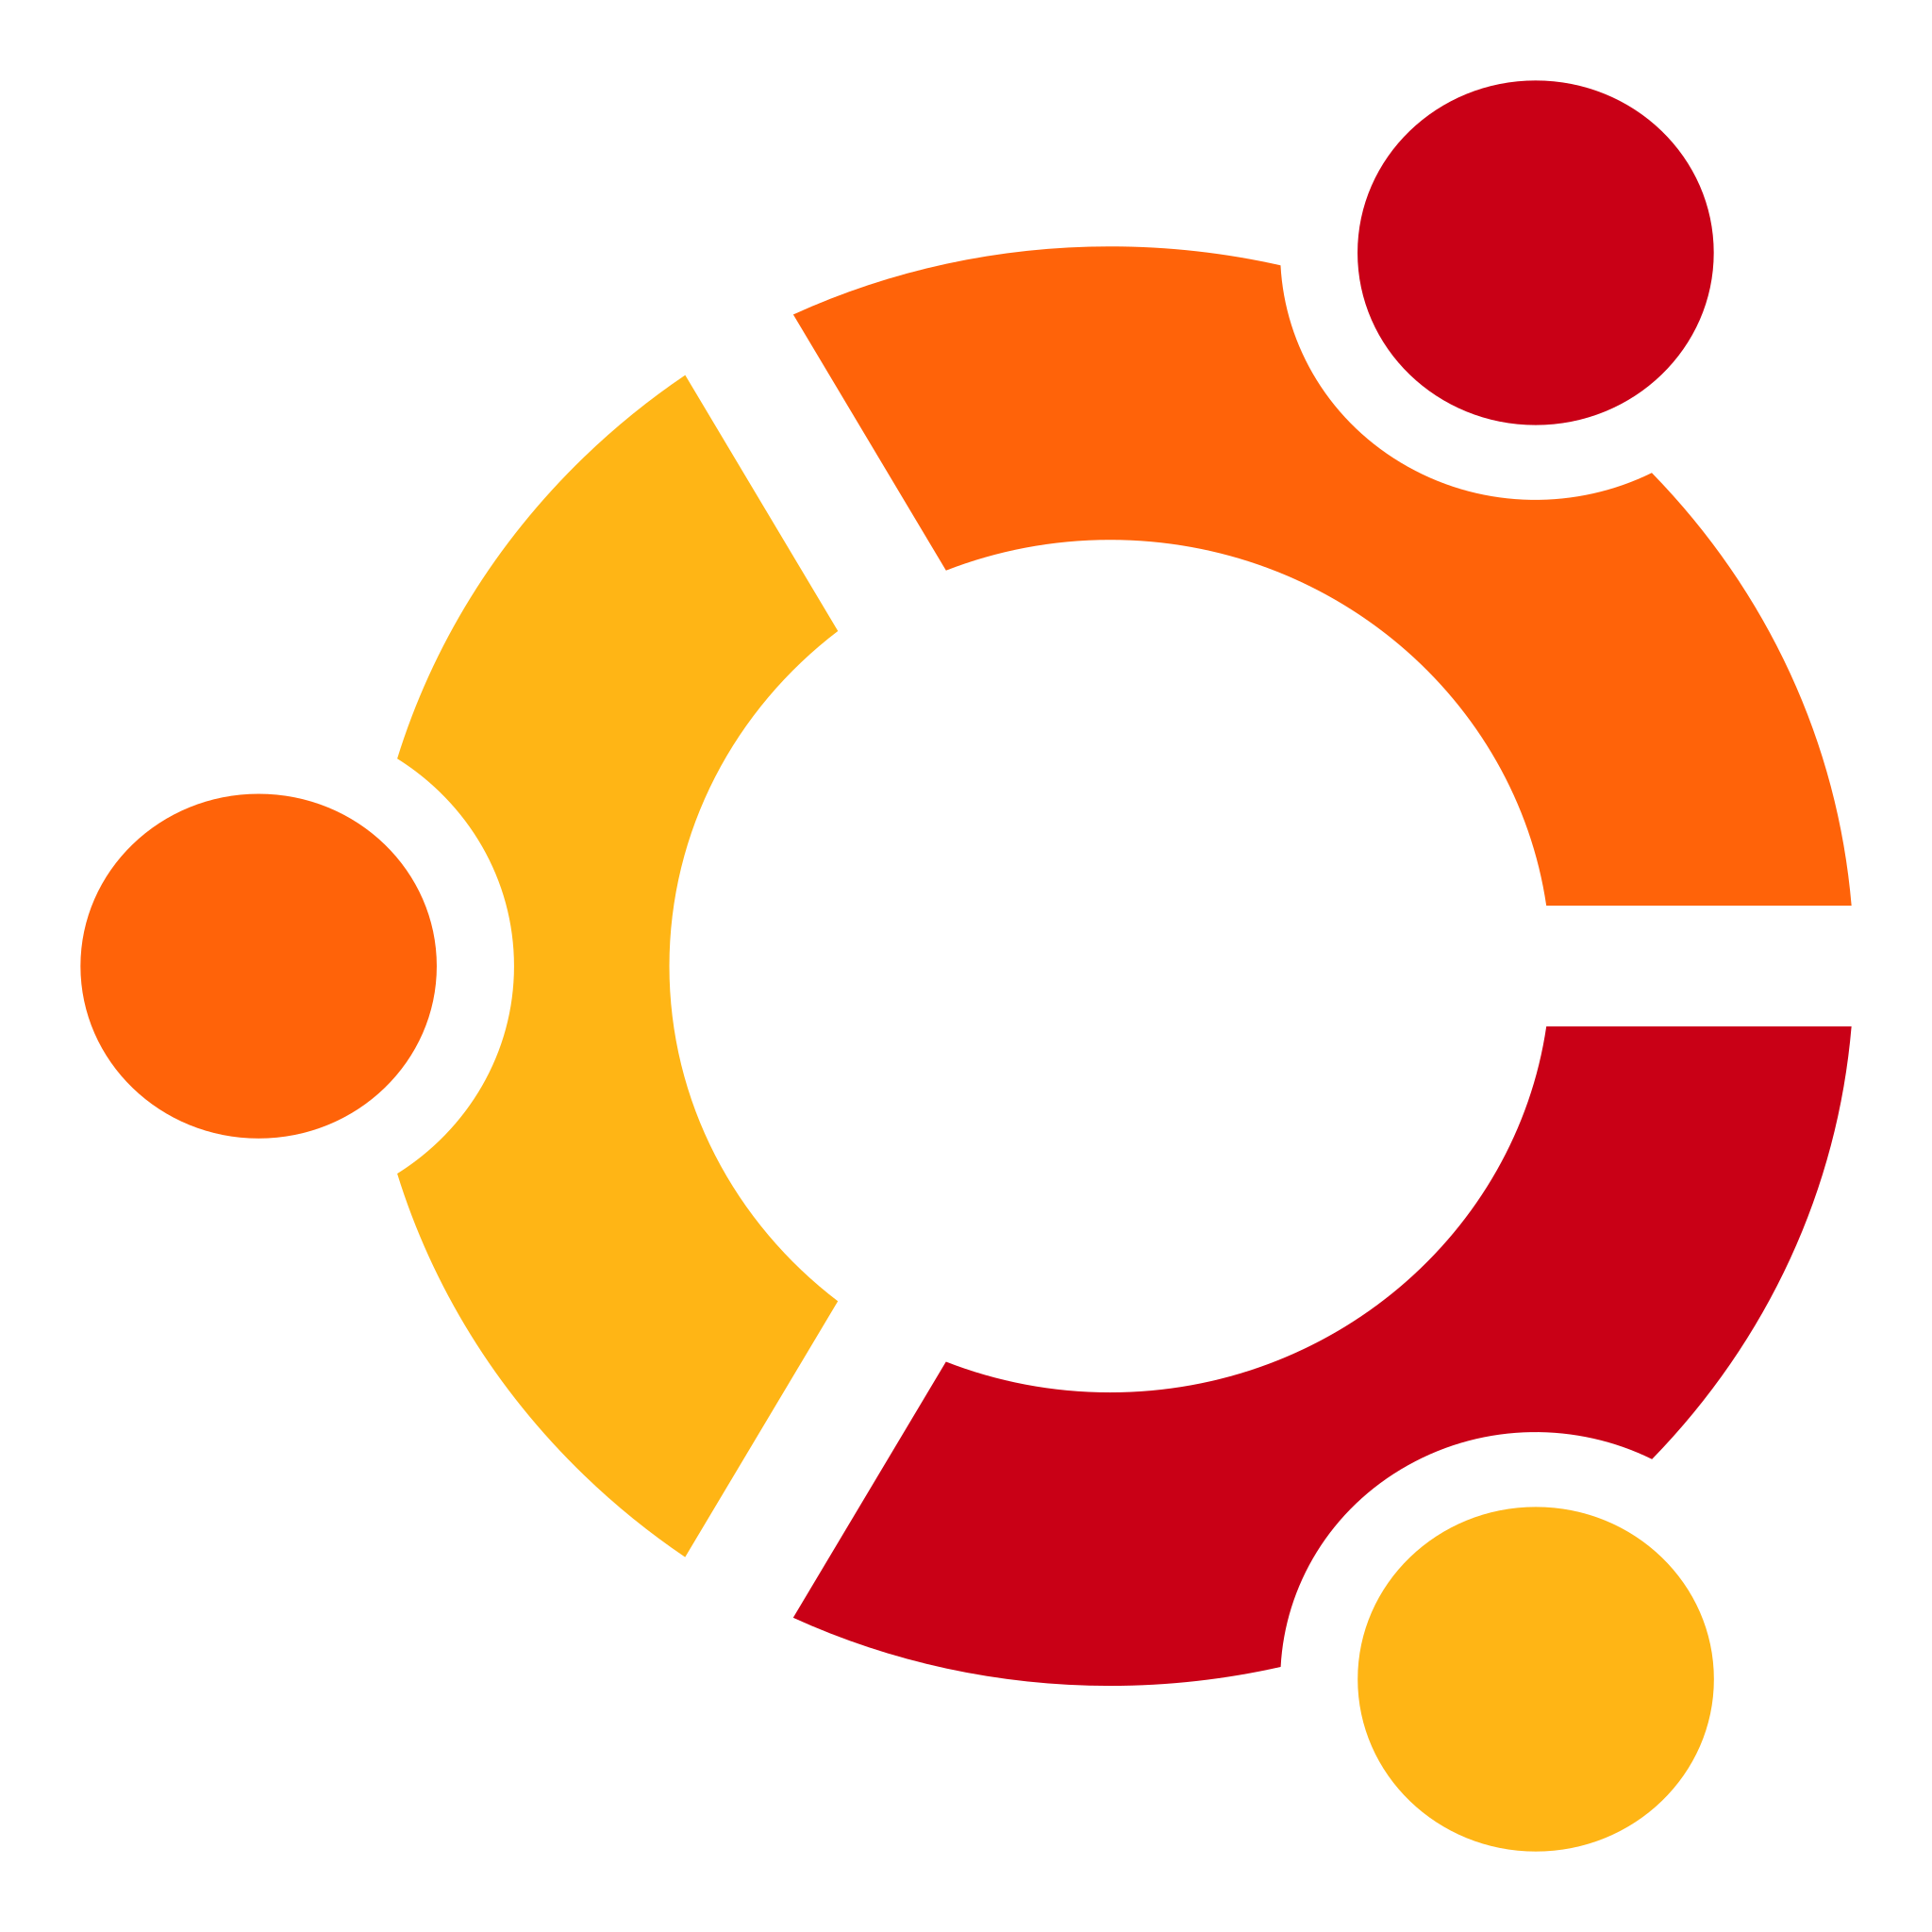 Ubuntu powered by FLECS